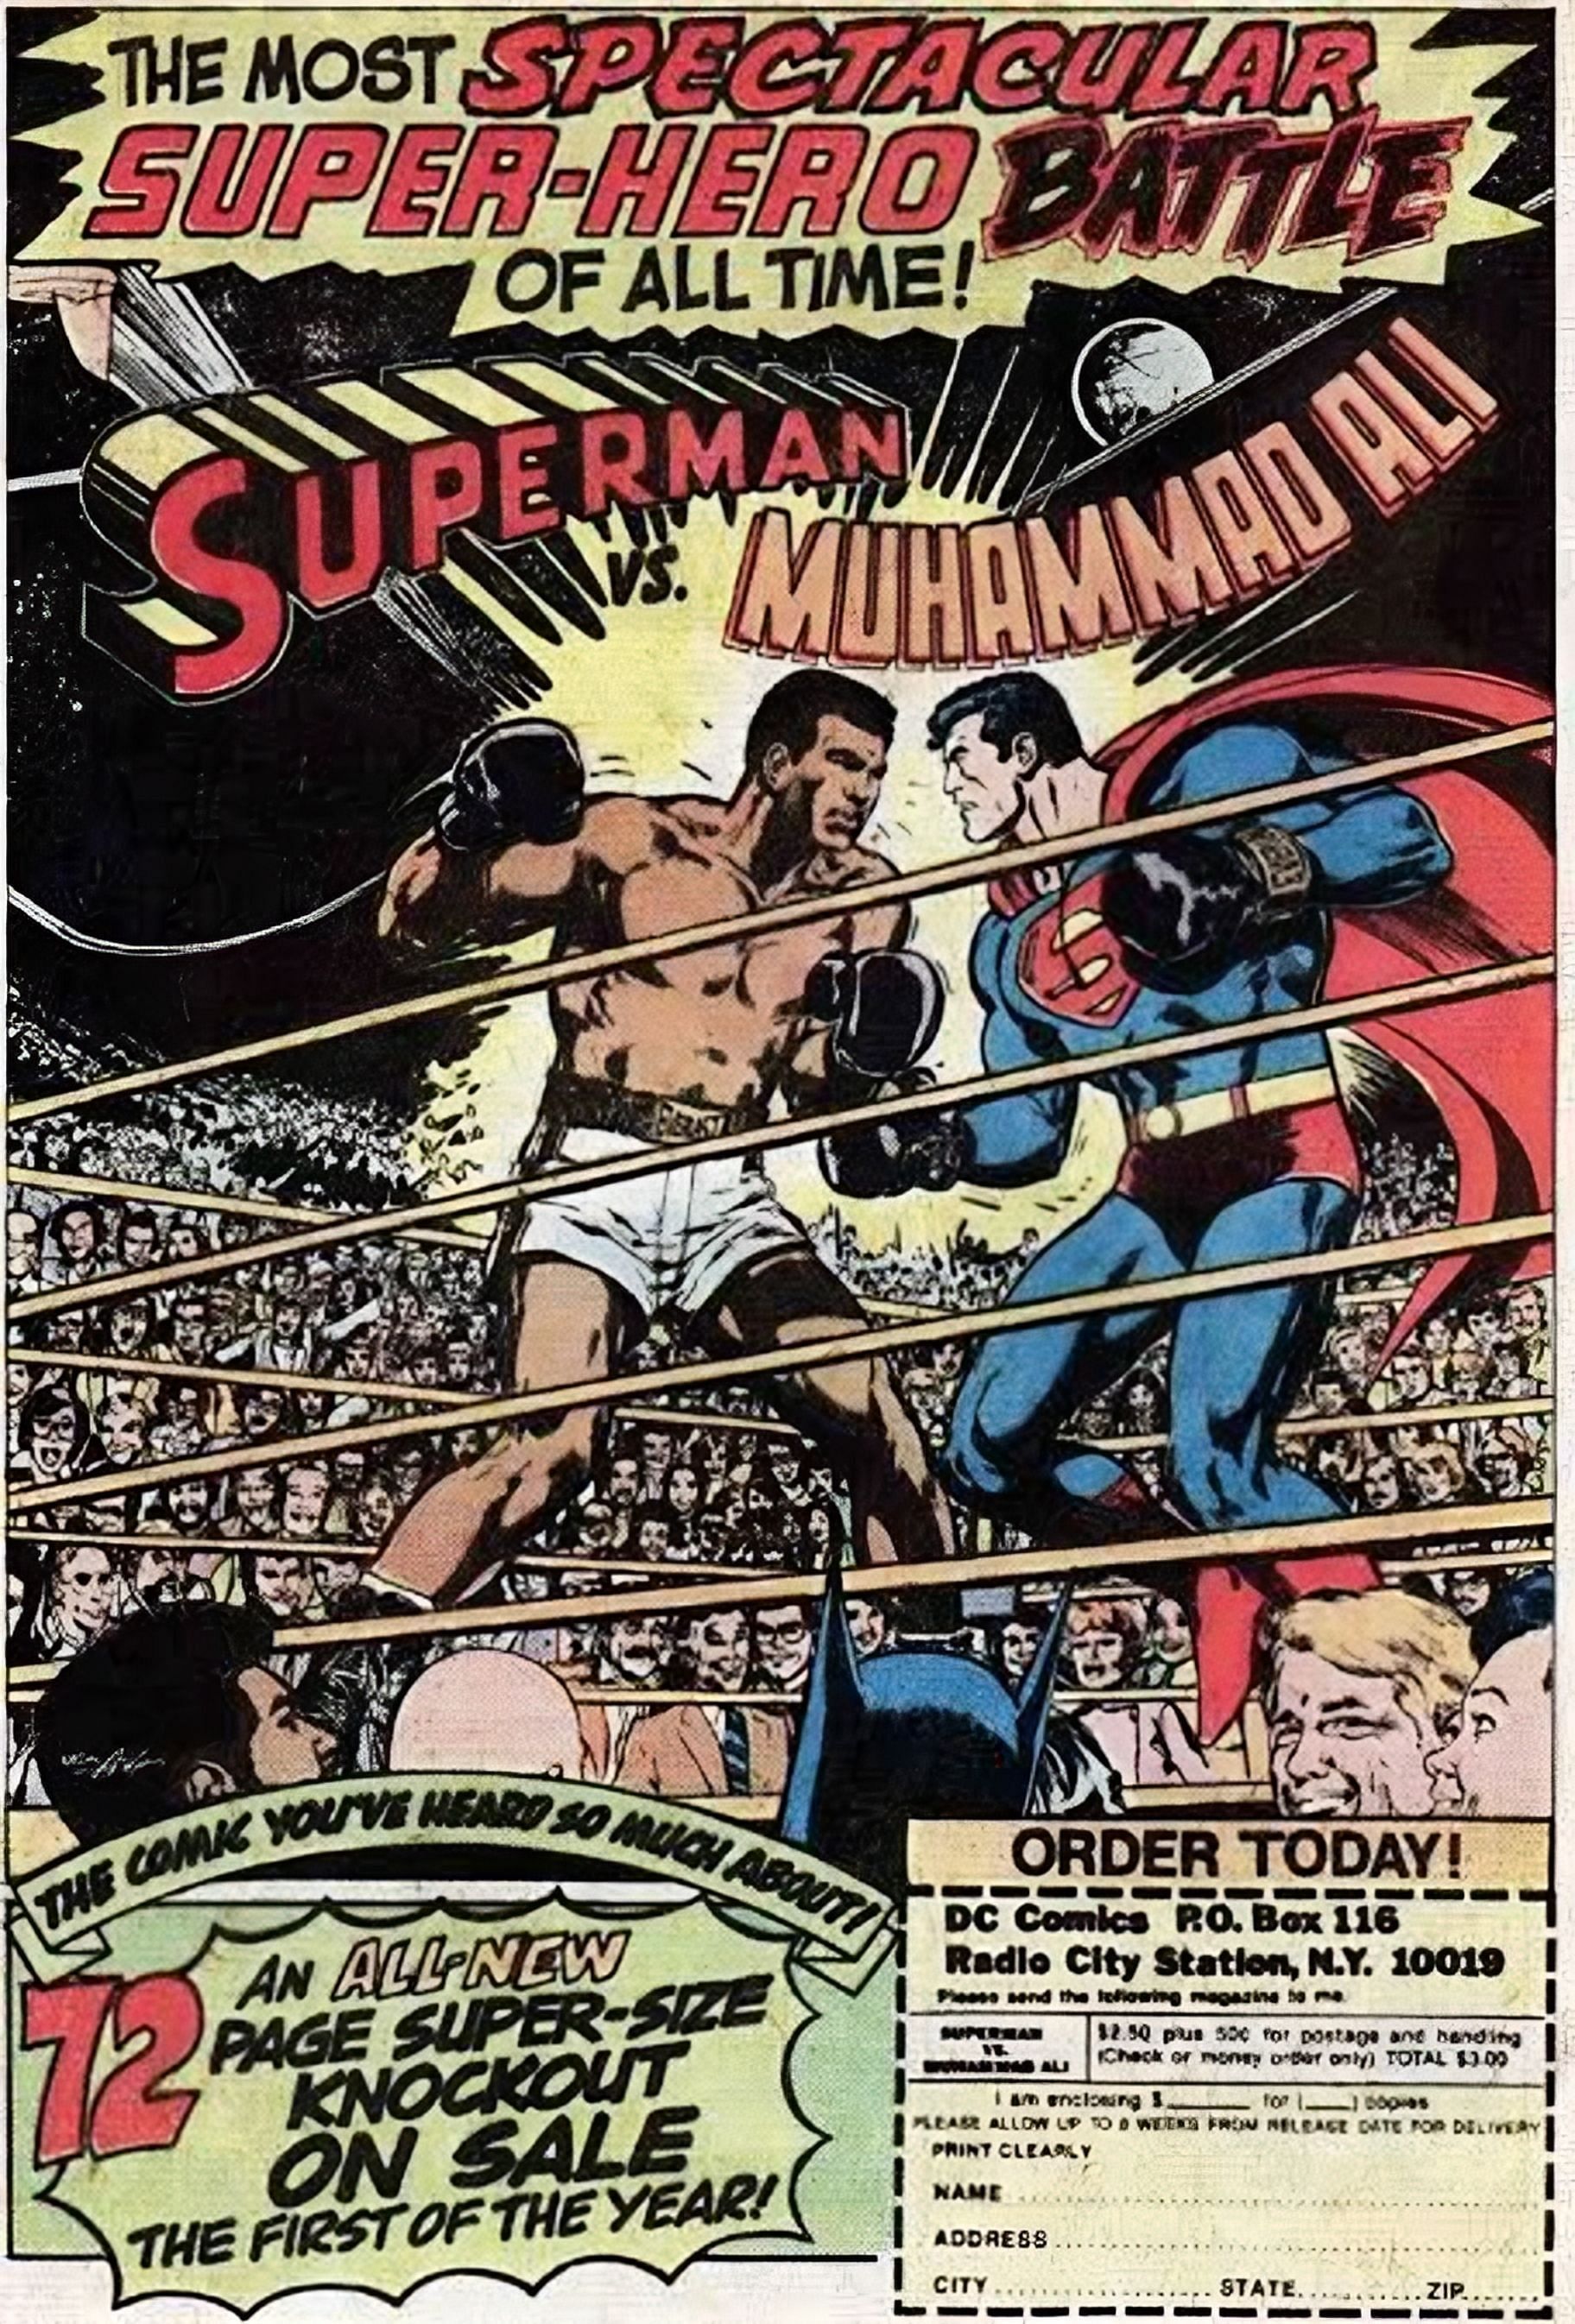 Superman vs Muhammad Ali (Image via DC Comics)